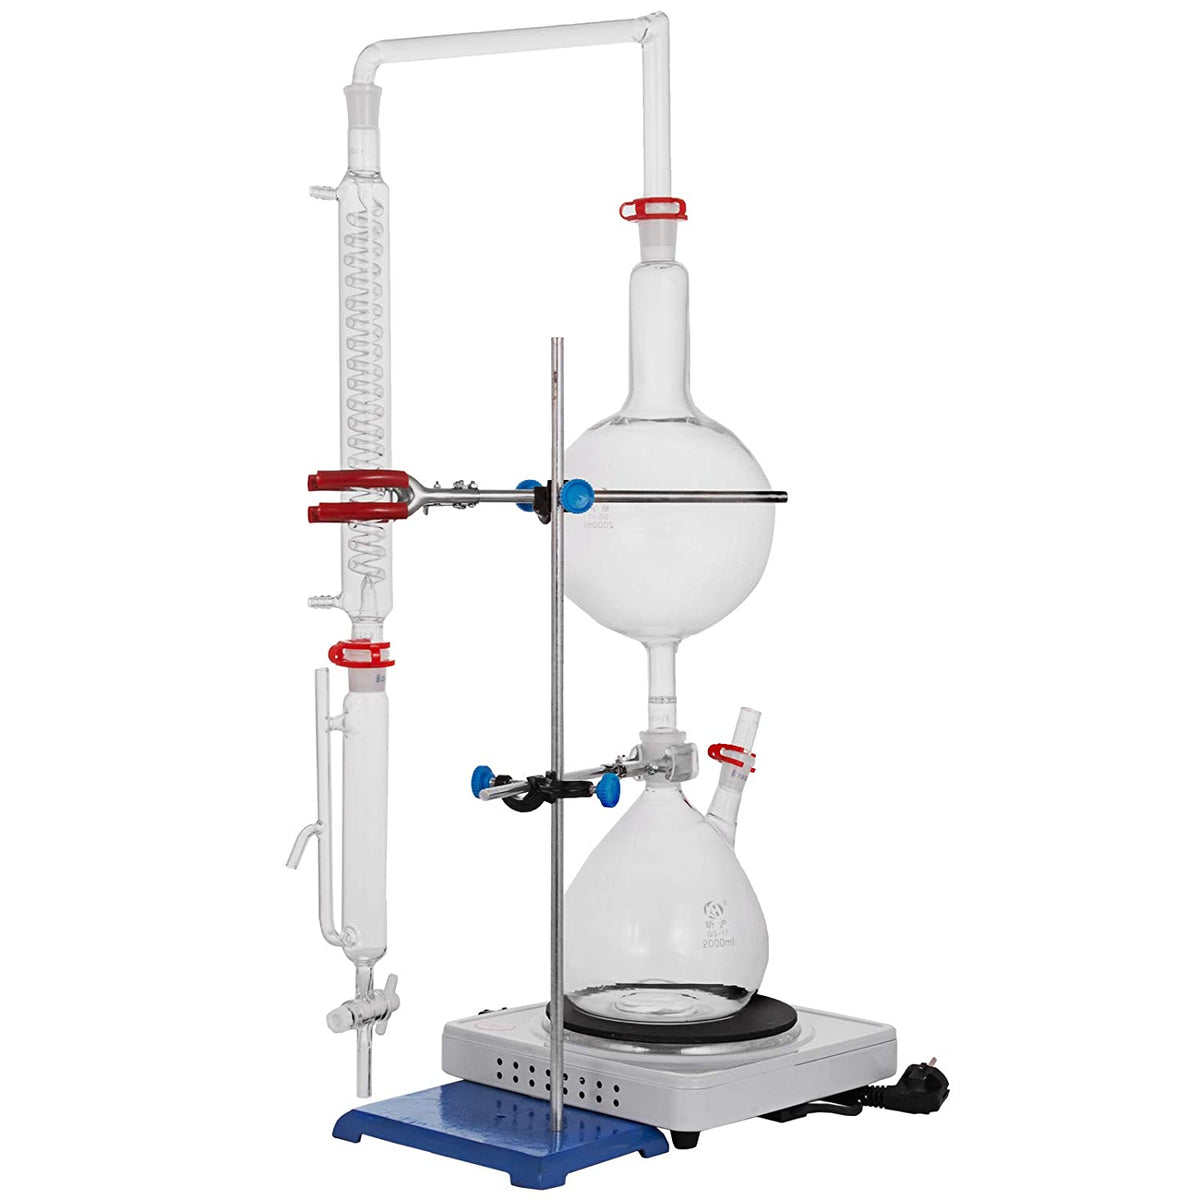 Essential Oil Distillation Apparatus - Distillation Kit With Heating Stove